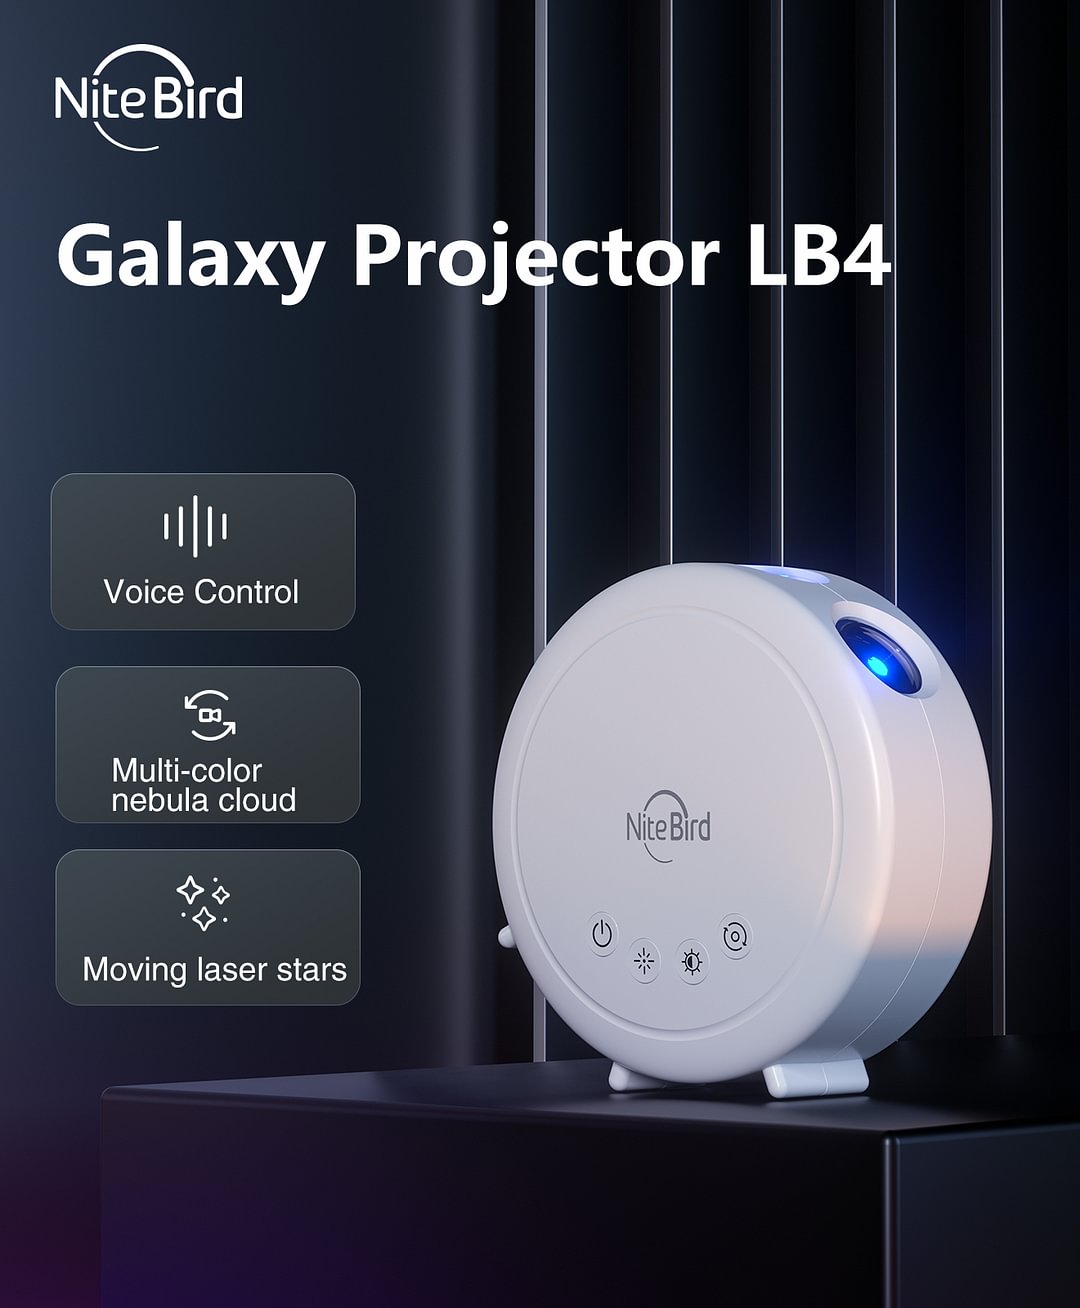 Galaxy Projector LB4